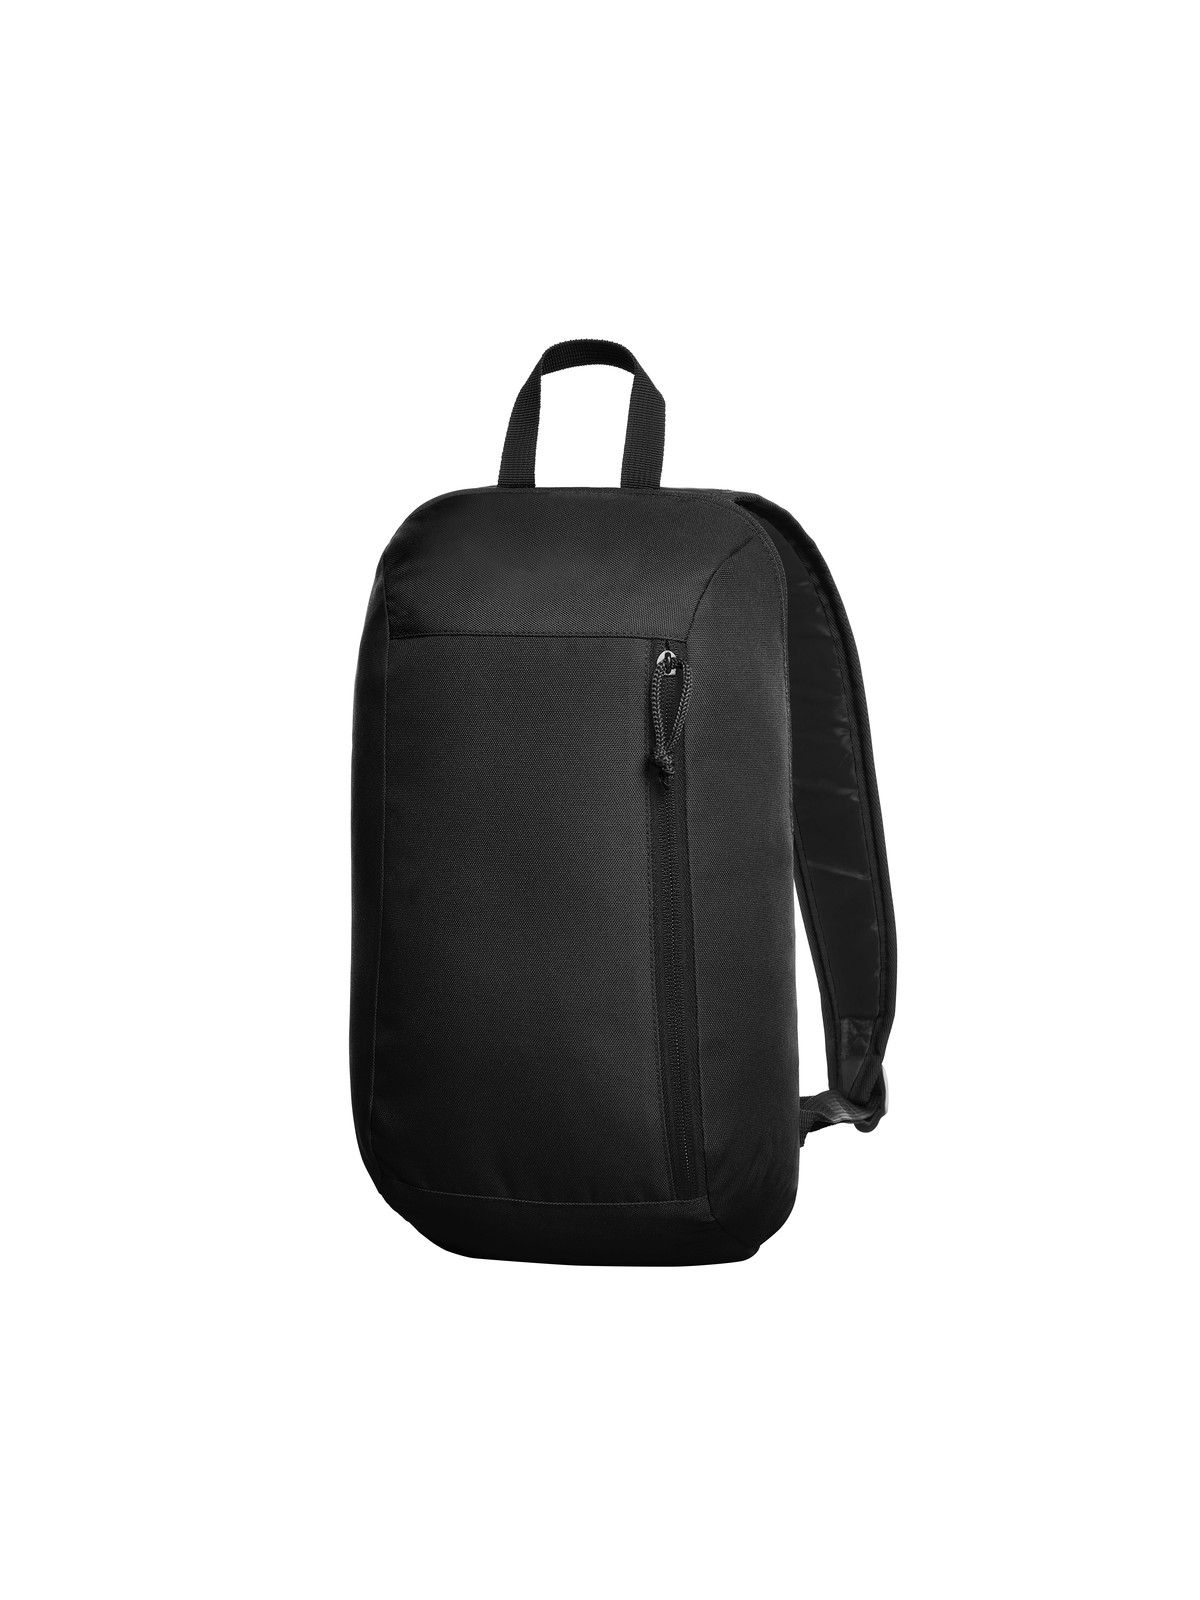 flow-backpack-black.webp